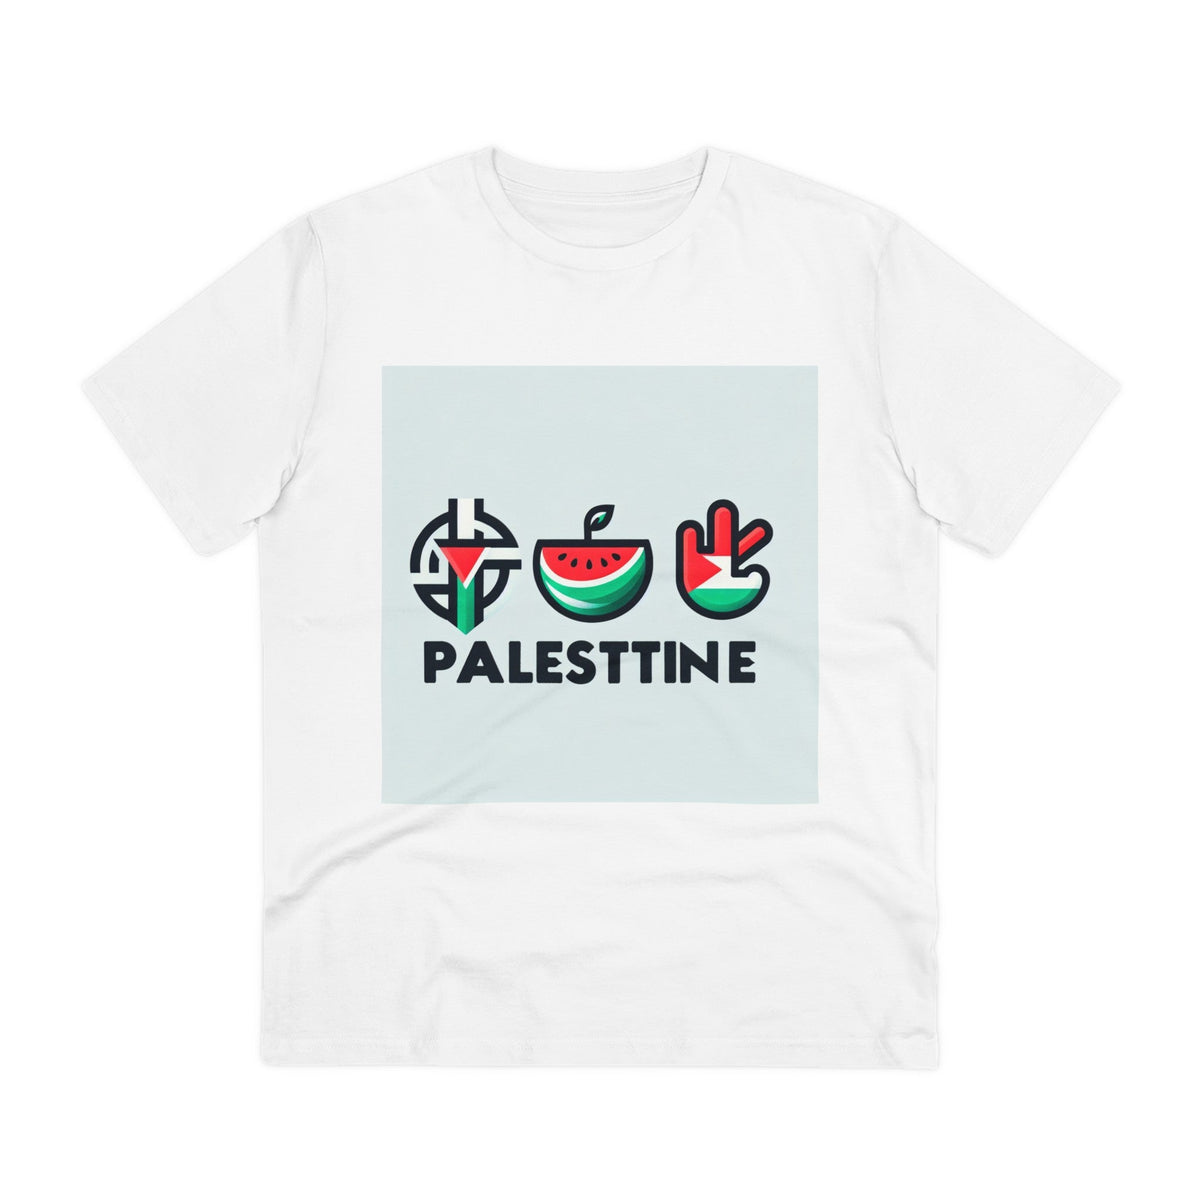 ’Sunset Hues of Palestine - Watermelon T-Shirt’ - White